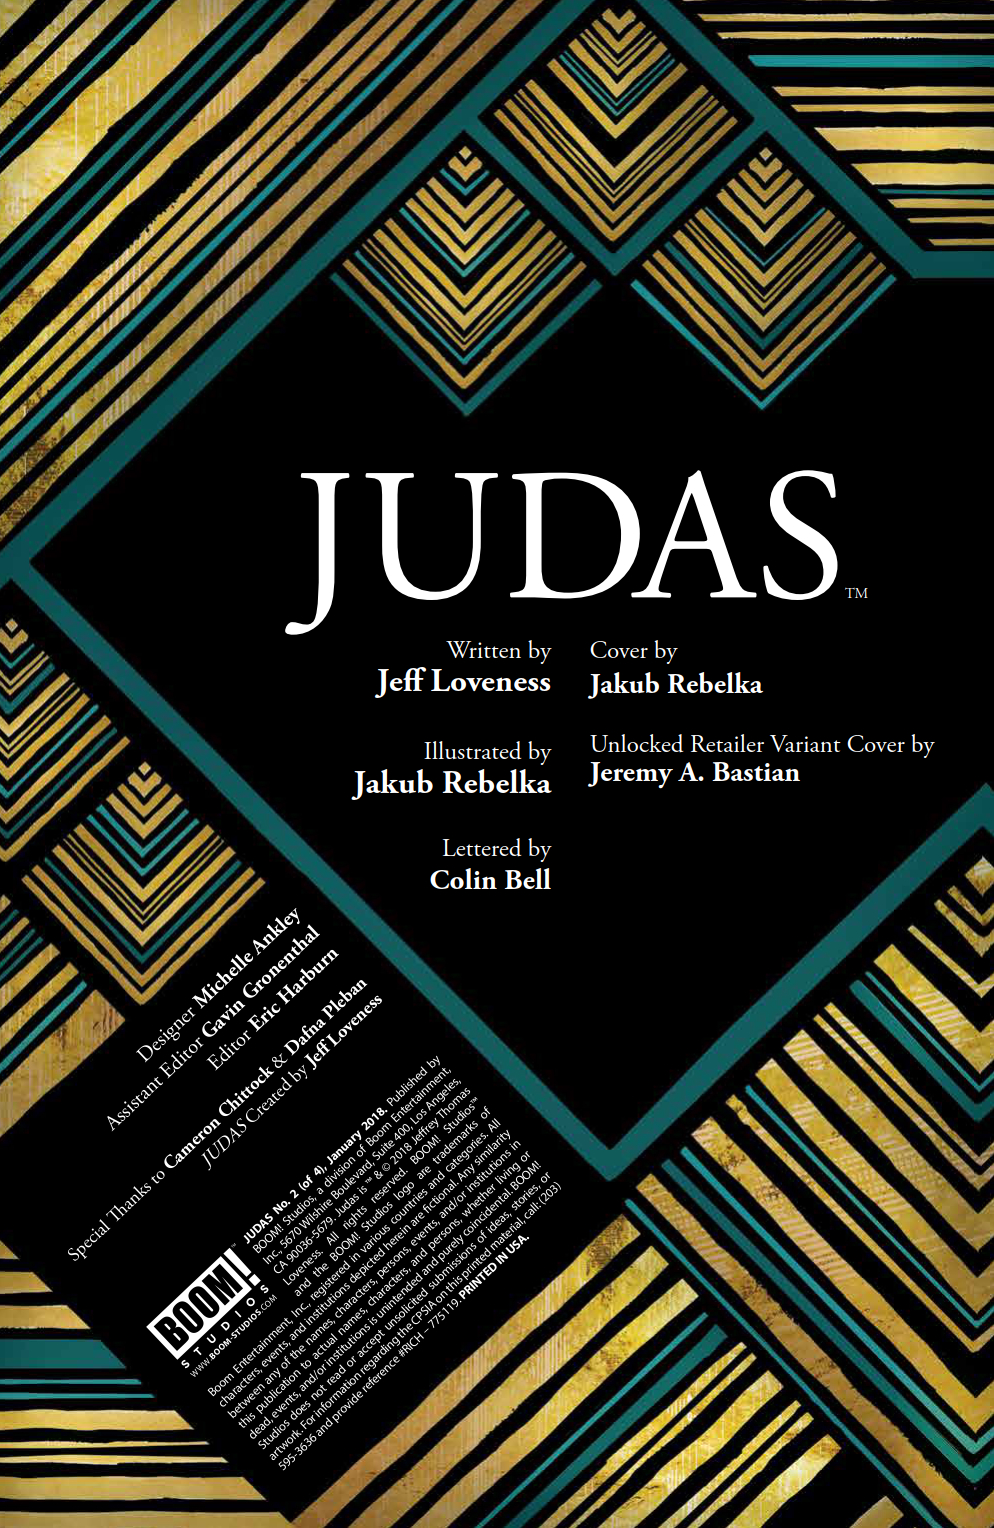 Judas_002_PRESS_2